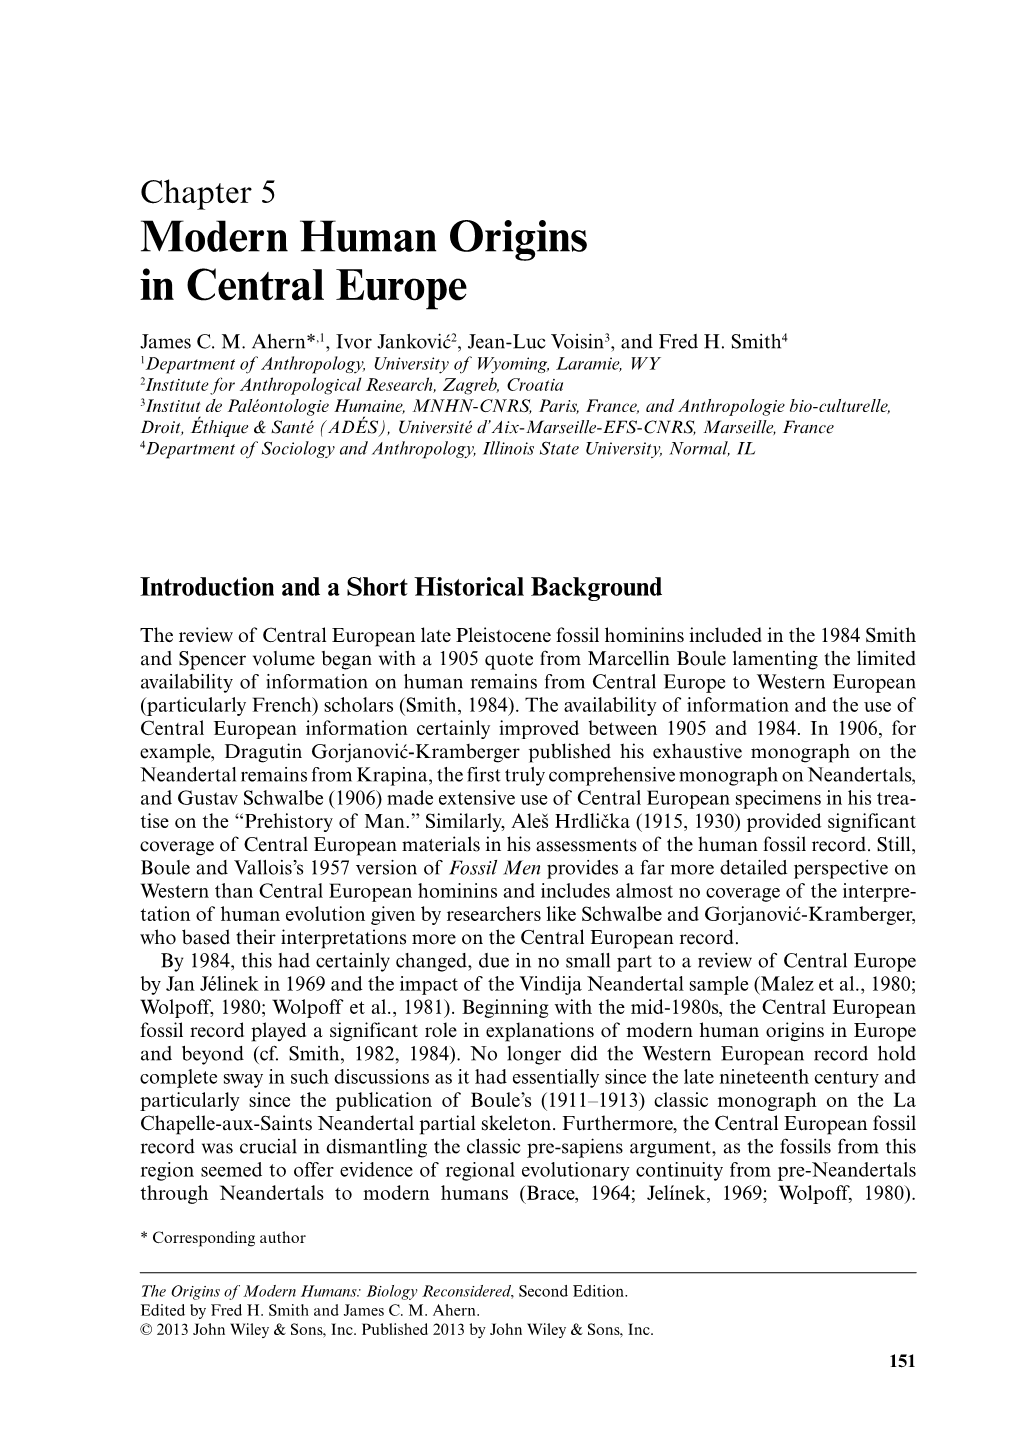 Modern Human Origins in Central Europe